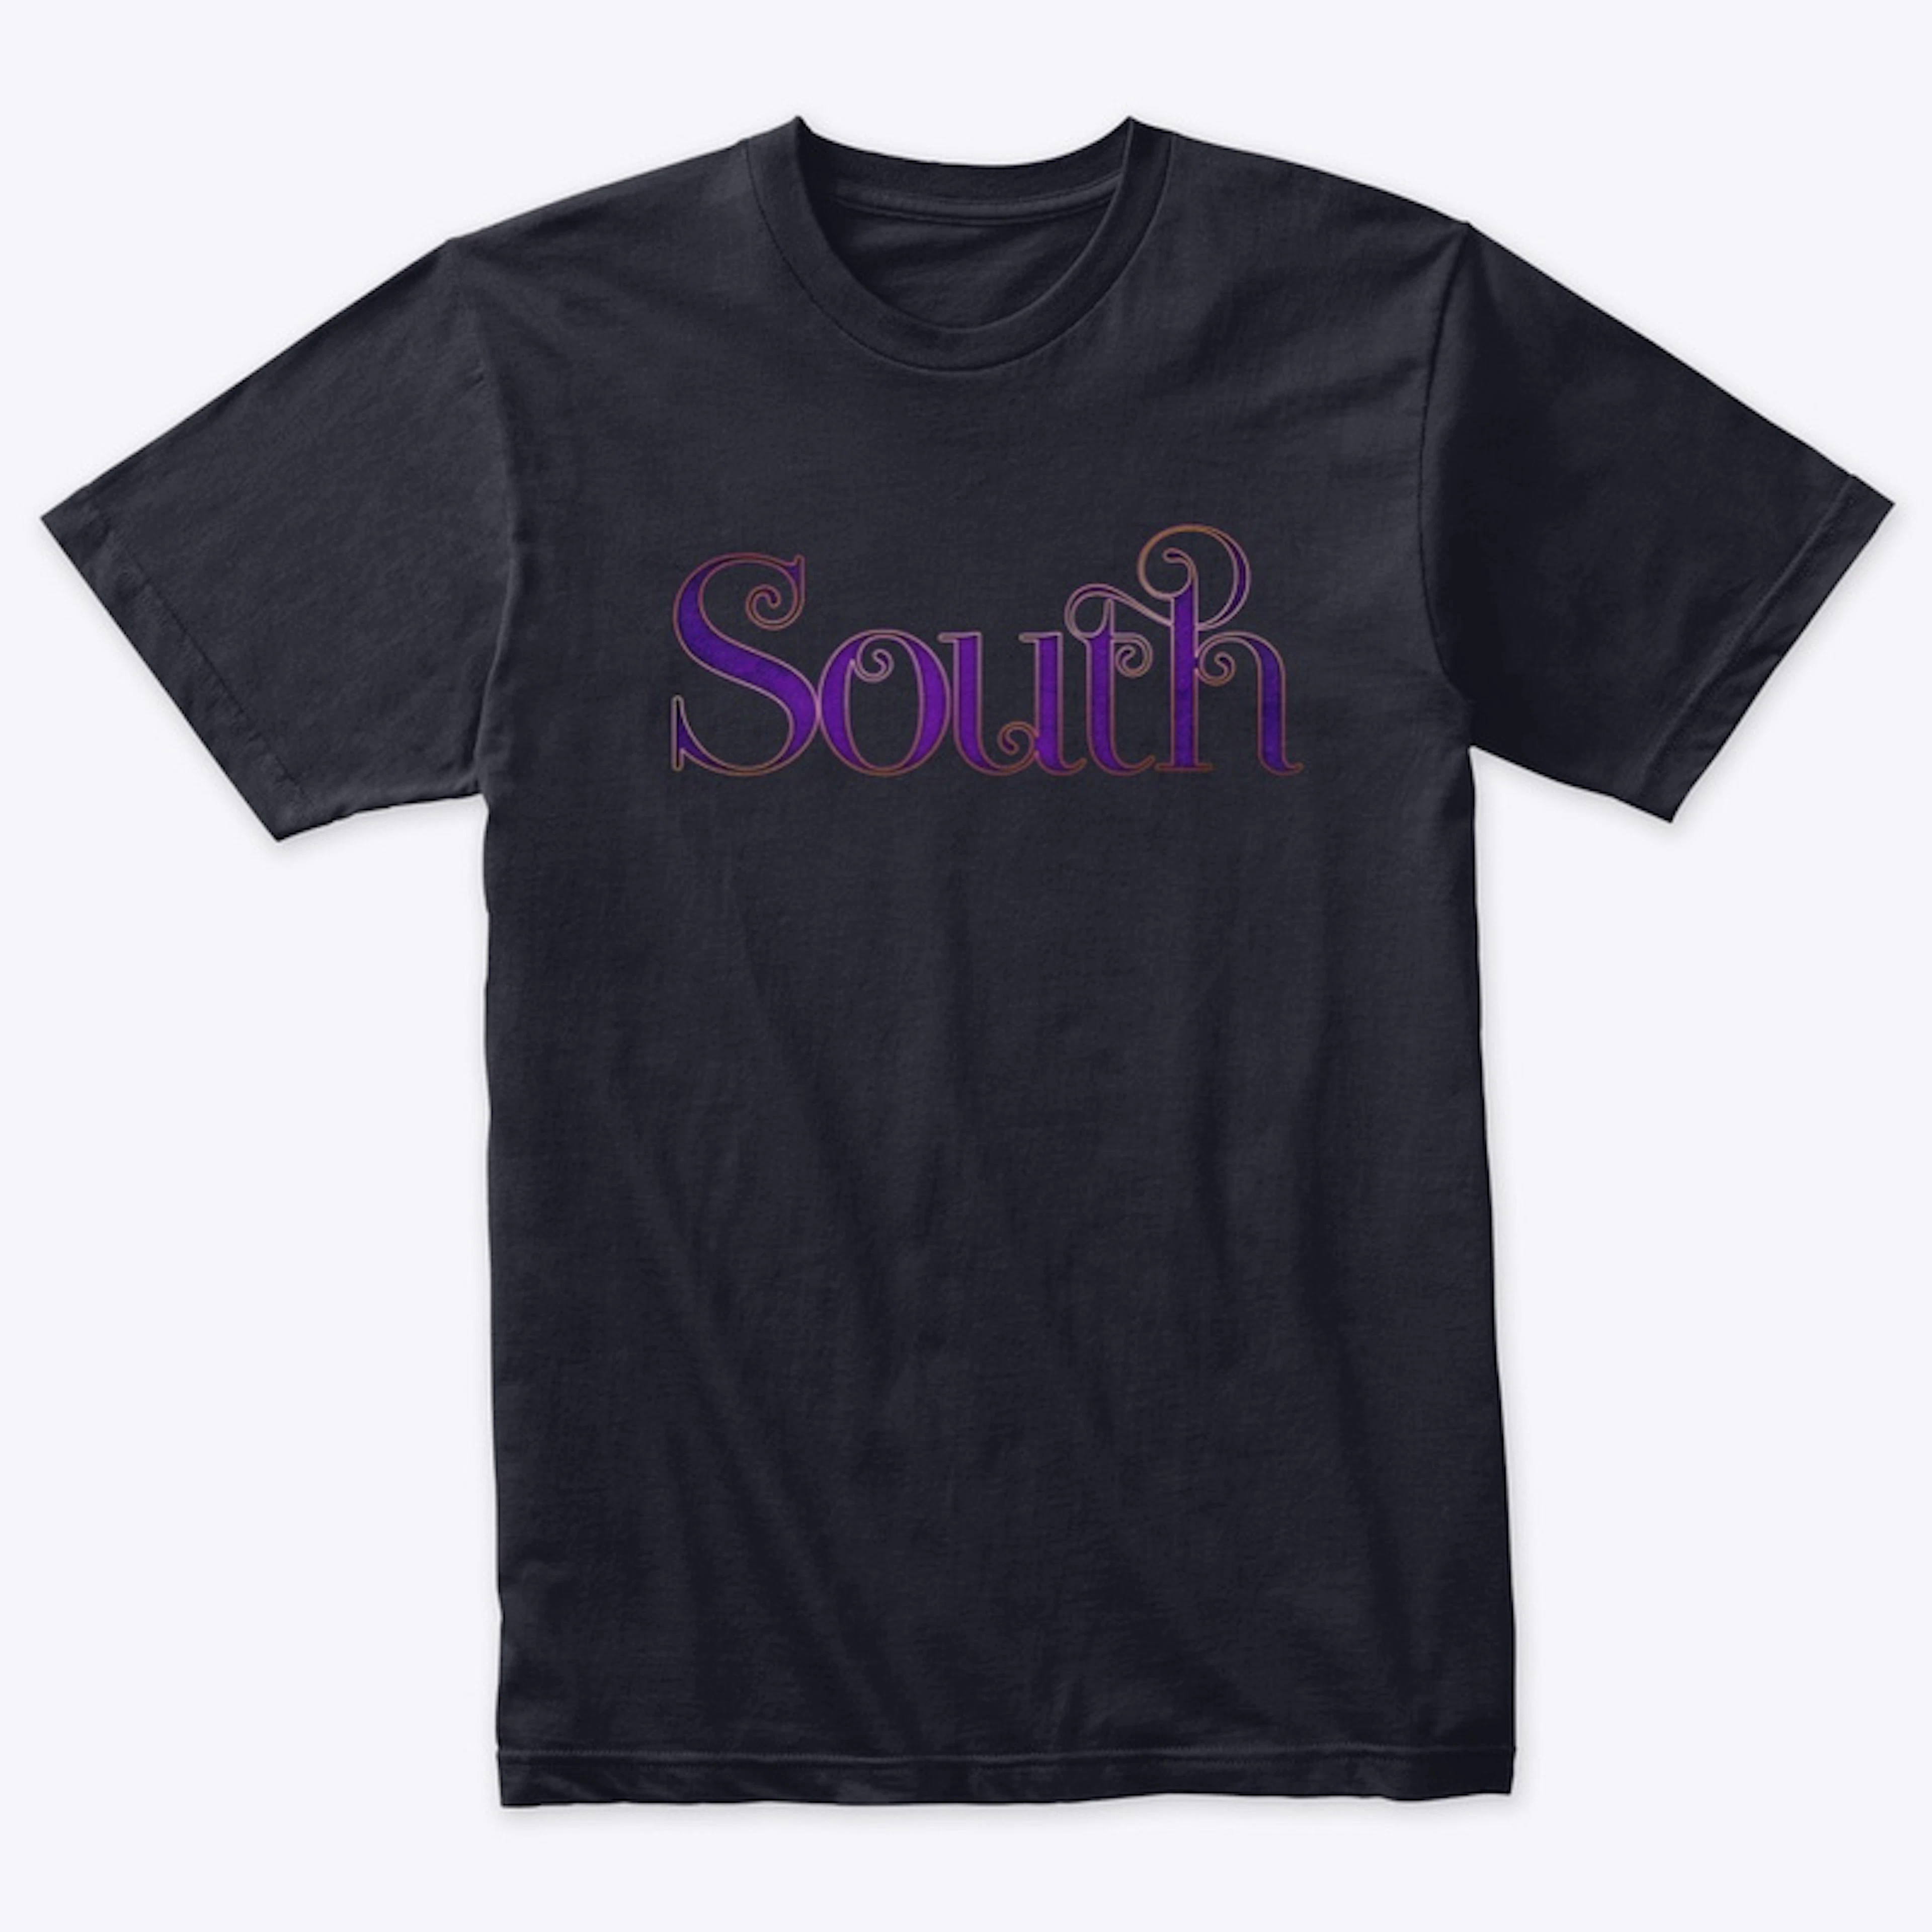 SOUTH Logo Tee